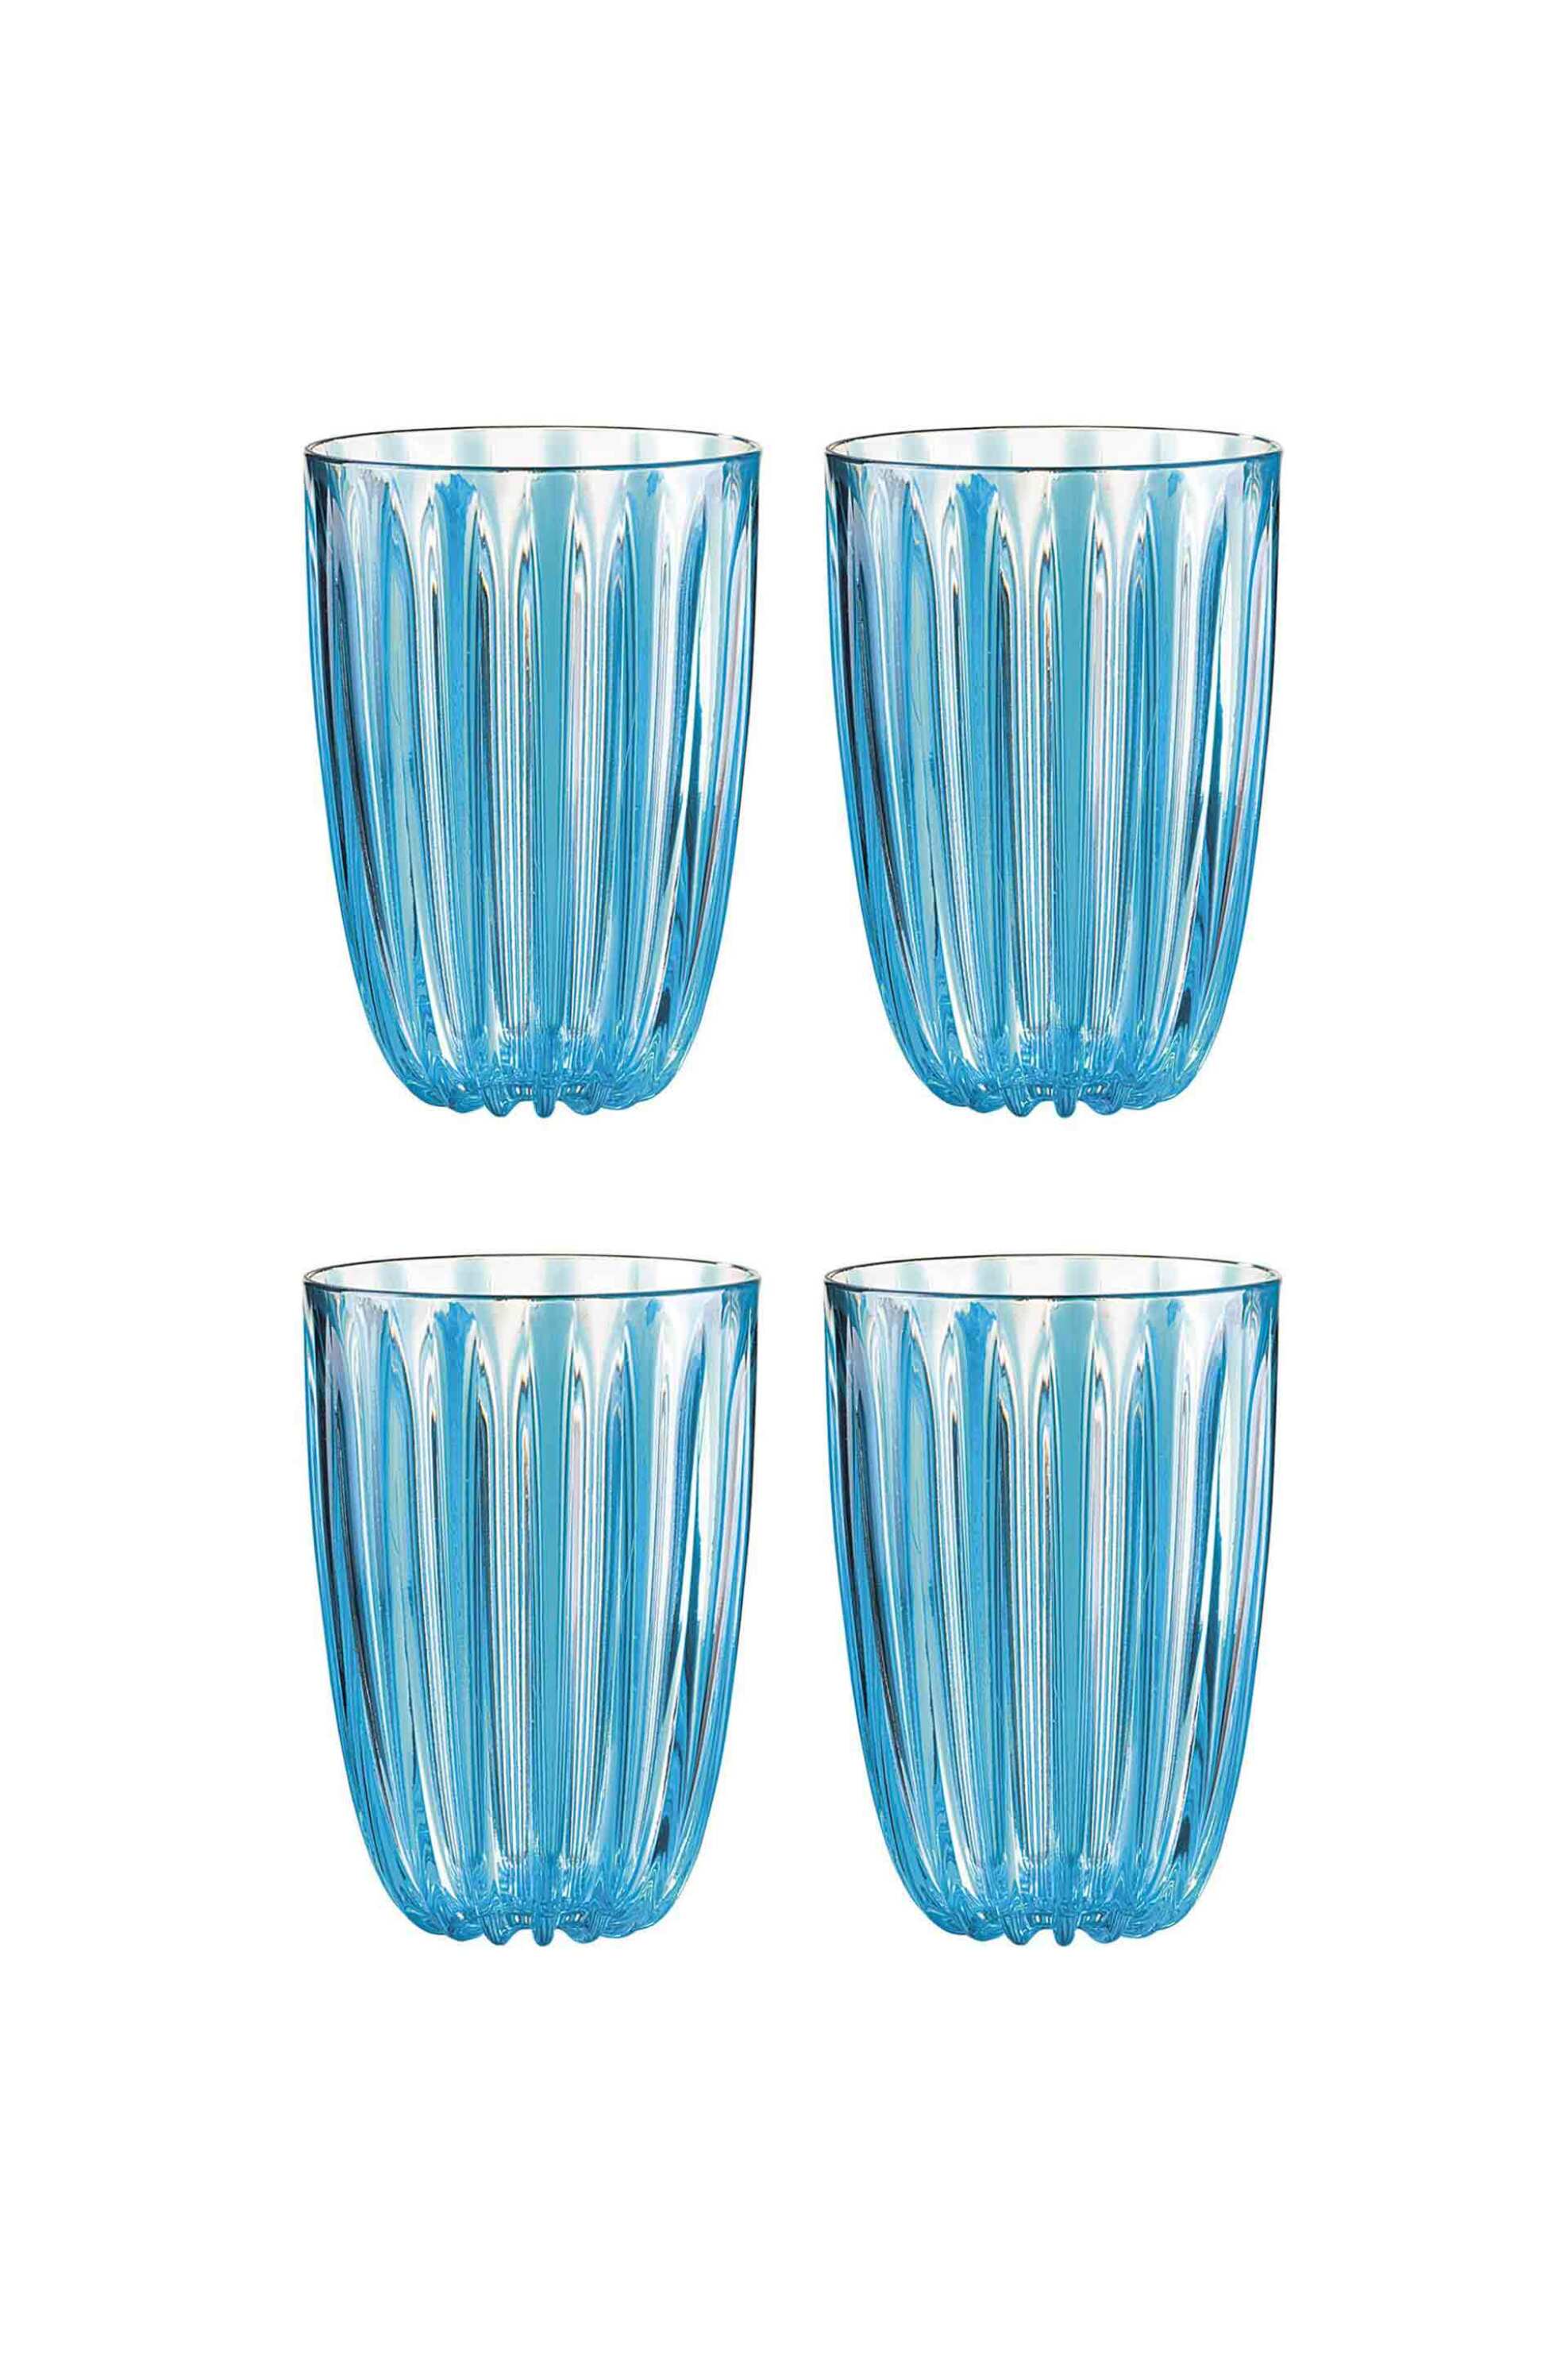 Home > ΚΟΥΖΙΝΑ > Υαλικά > Ποτήρια Guzzini σετ ποτήρια πλαστικά με ανάγλυφο σχέδιο "Dolcevita" 9 x 12,8 cm - 8008392357391